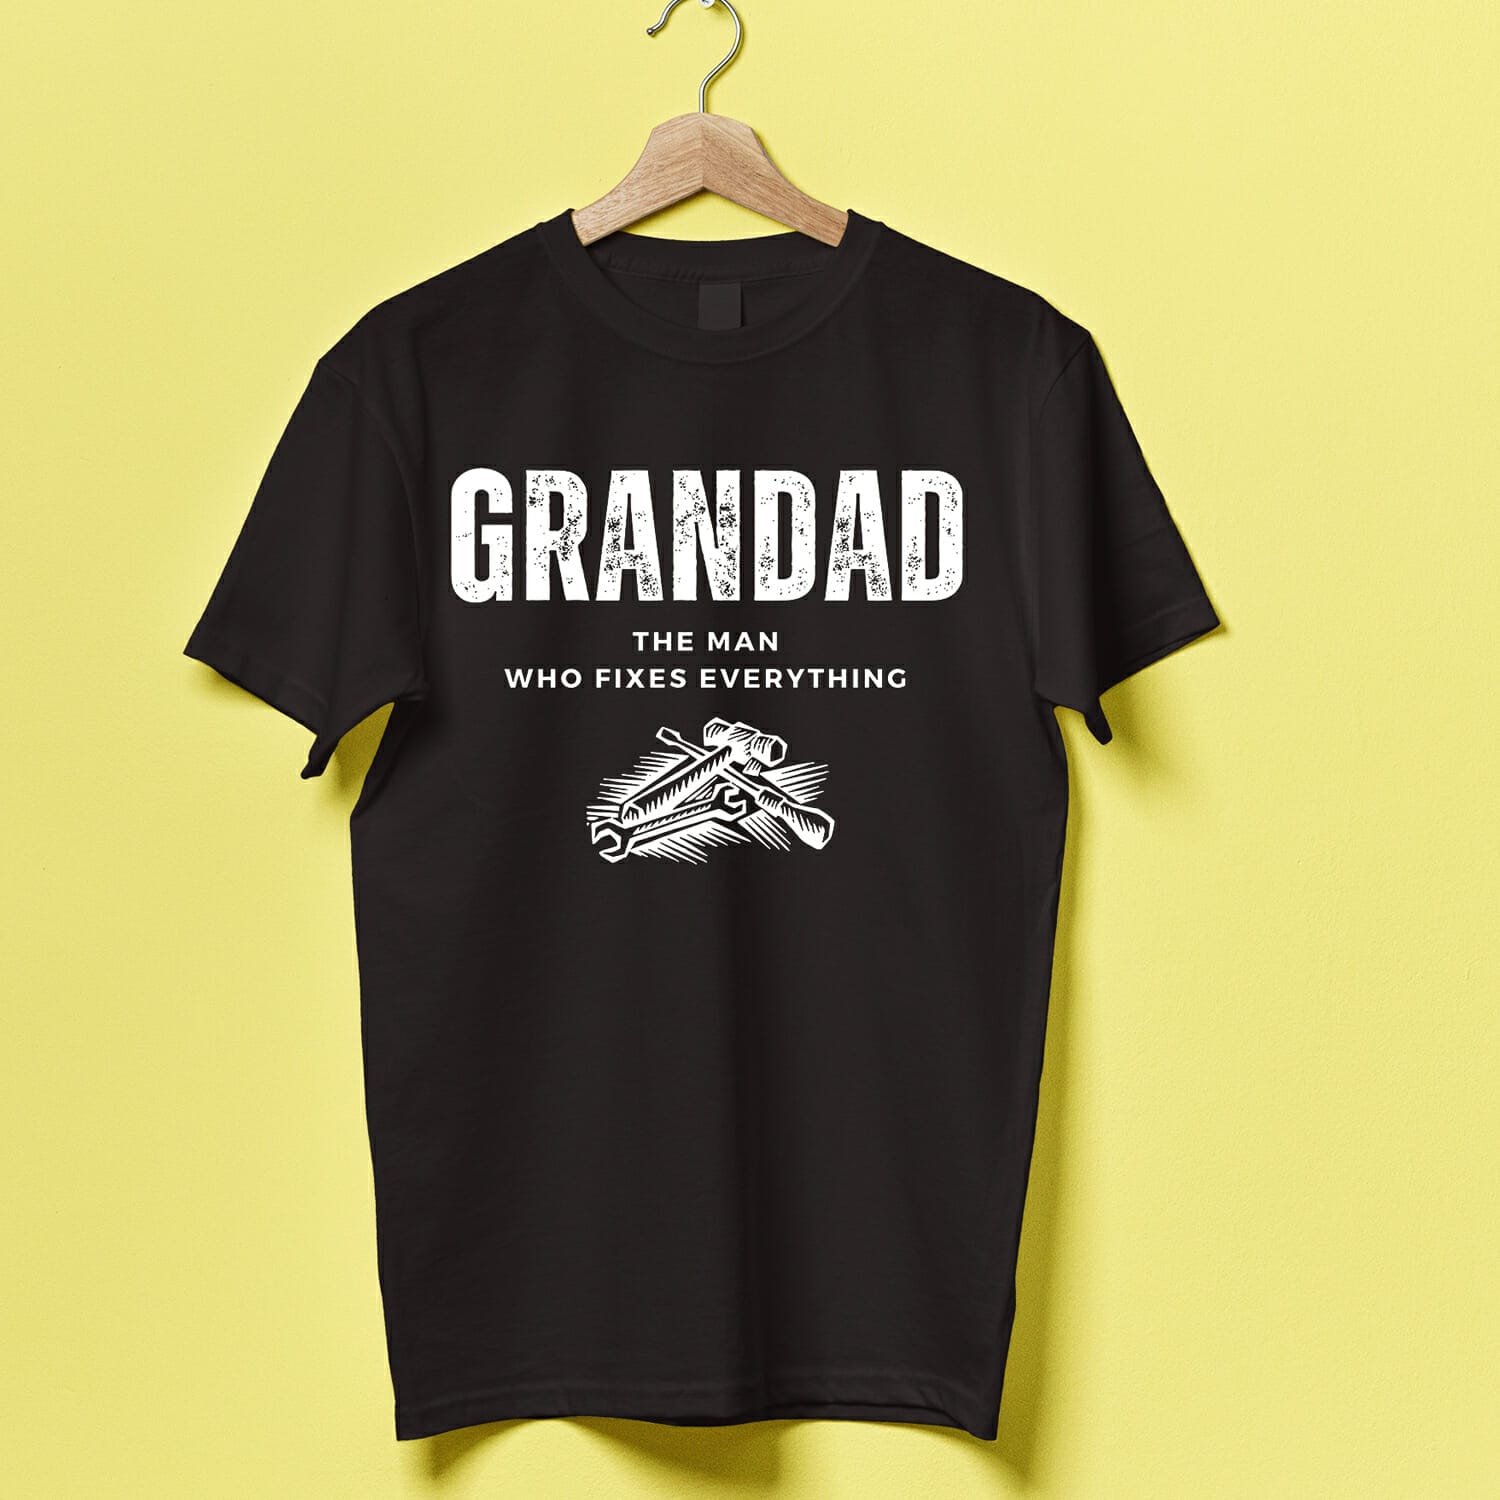 Grandad the man who fixes everything tshirt design